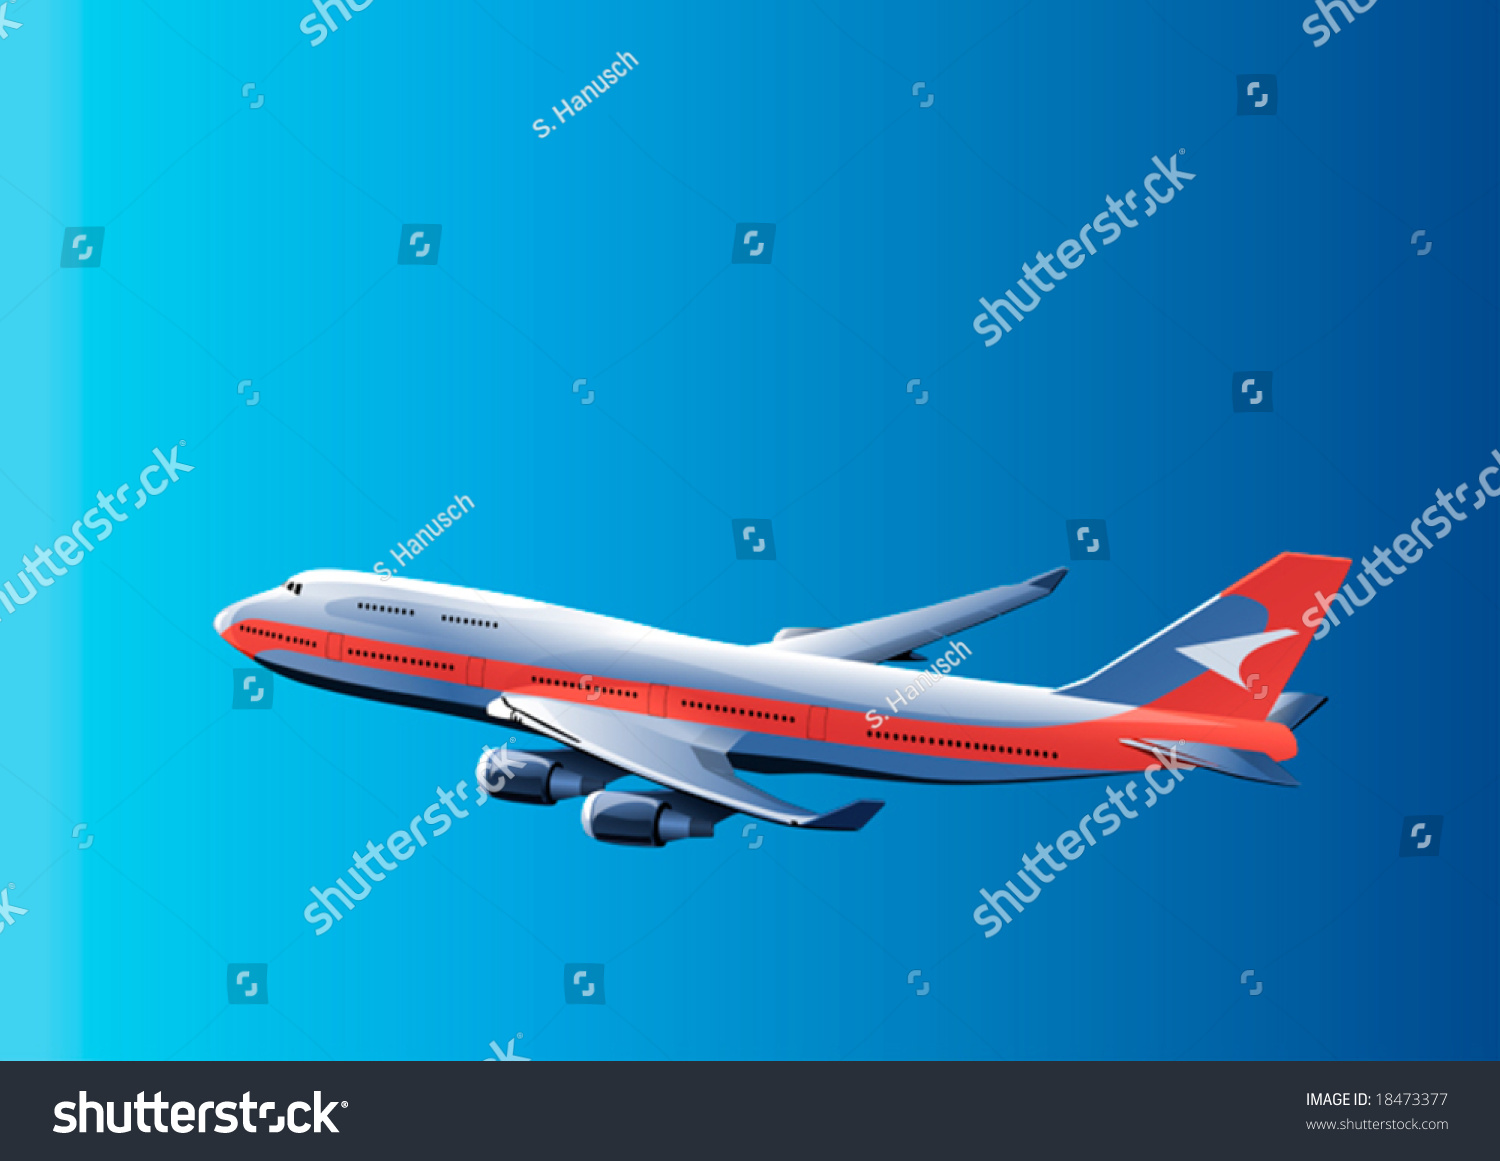 SVG of passenger airplane svg